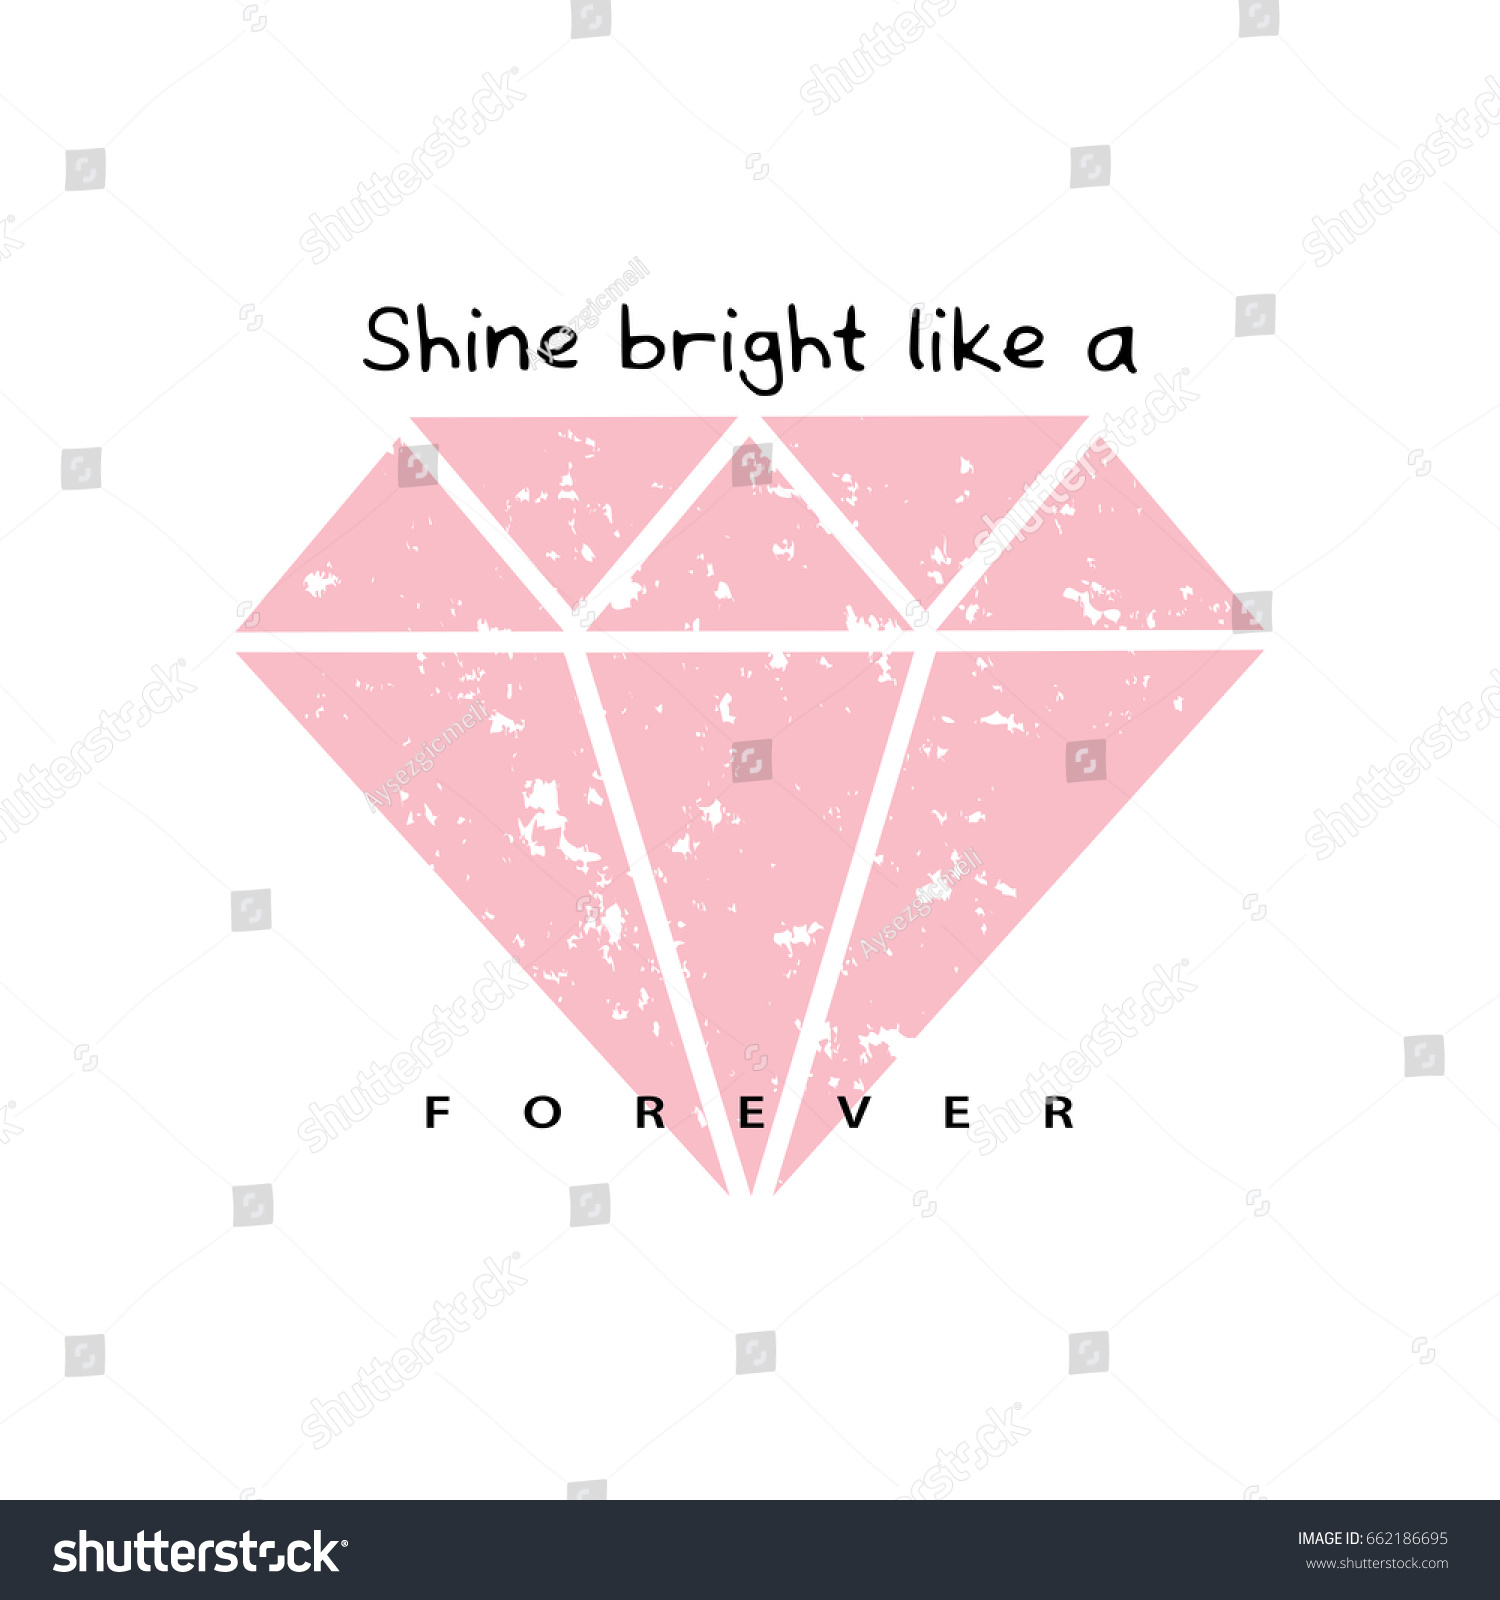 Блеск shine bright. Shine Bright like a Diamond. Шайн Брайт лайк э Даймонд. Shine Bright like a Diamond картинки. Shine Bright like a Diamond надпись.